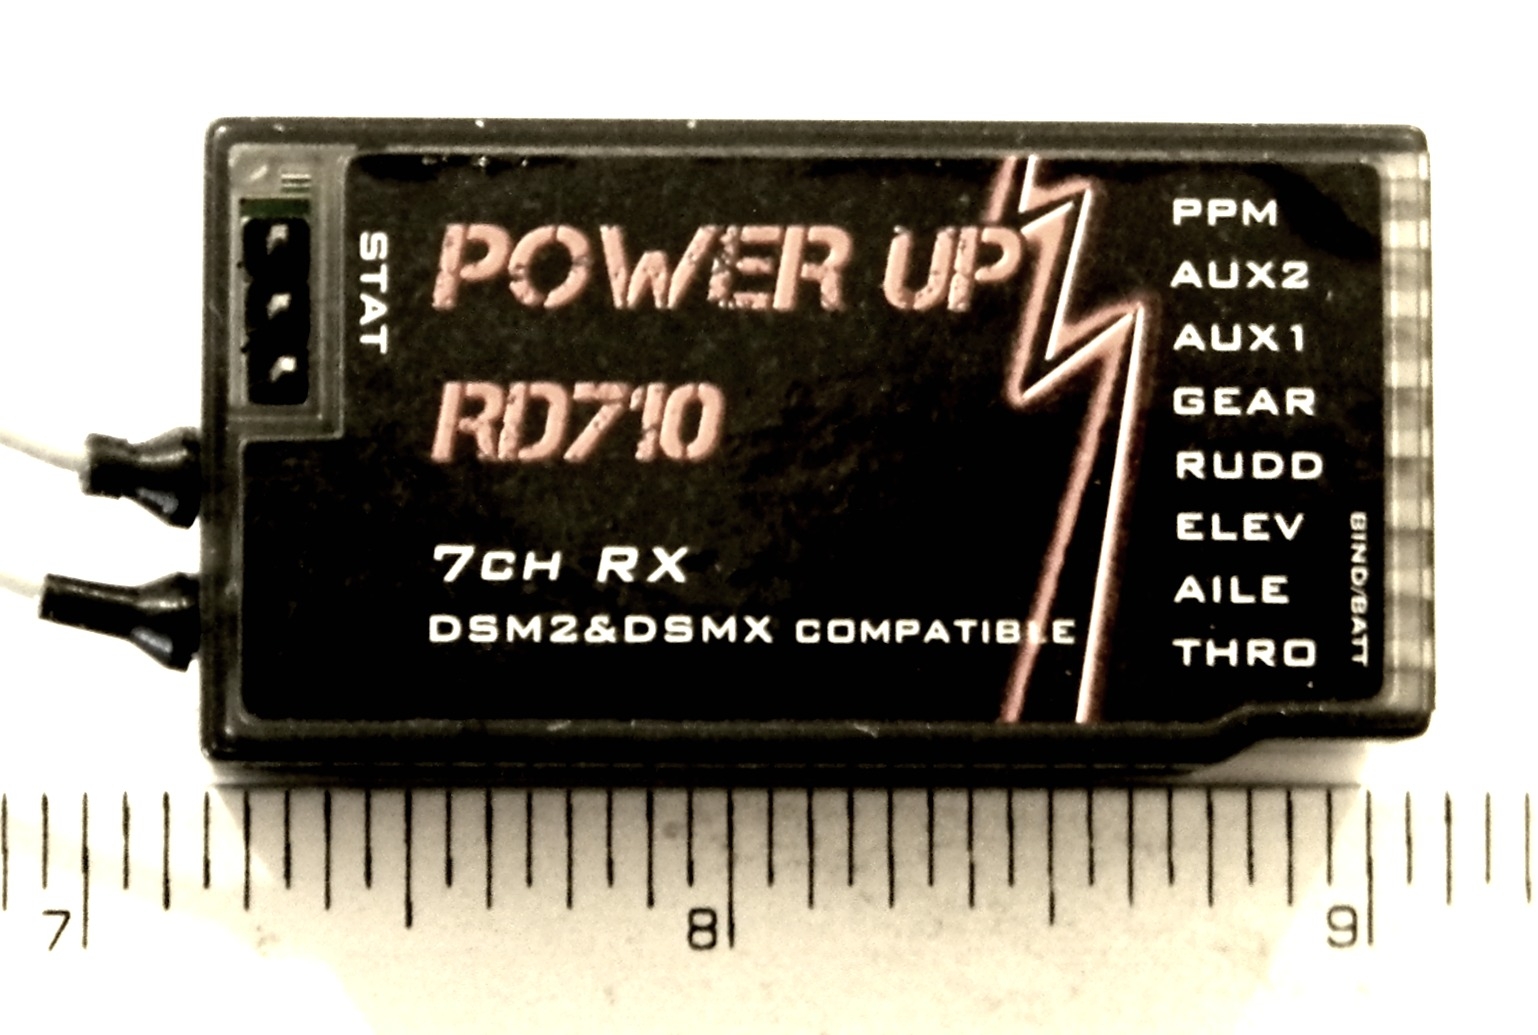 PowerUp RD710 2.4GHz 7CH DSM2 DSMX Compatible Receiver